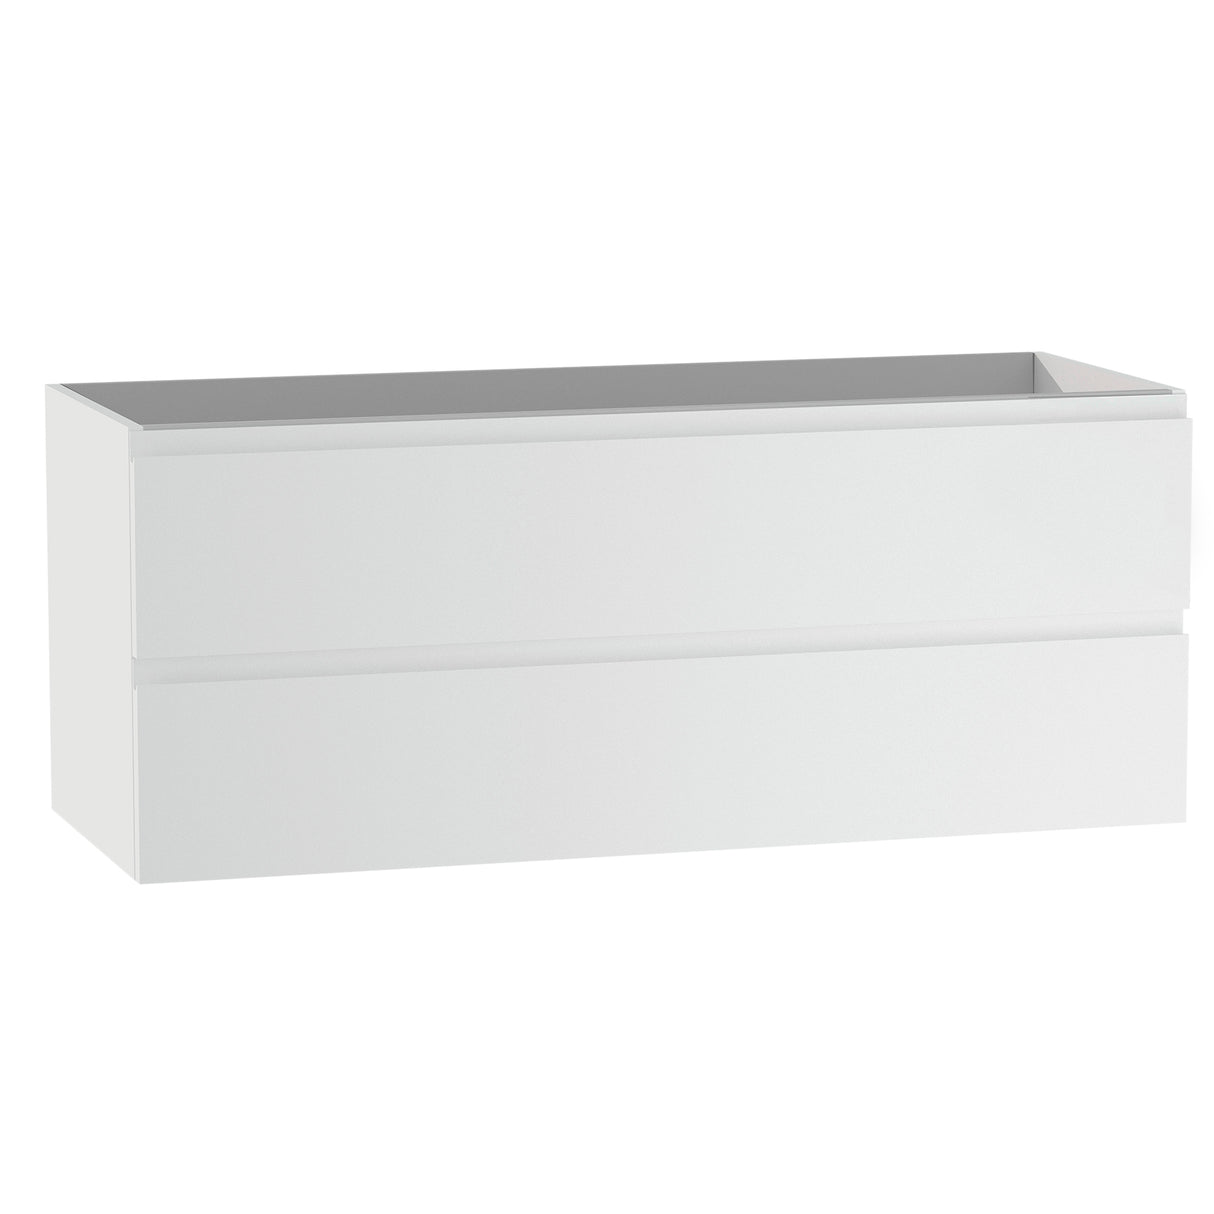 DAX Pasadena Single Vanity Cabinet with Onix Basin, 40", Matte White DAX-PAS014027-ONX